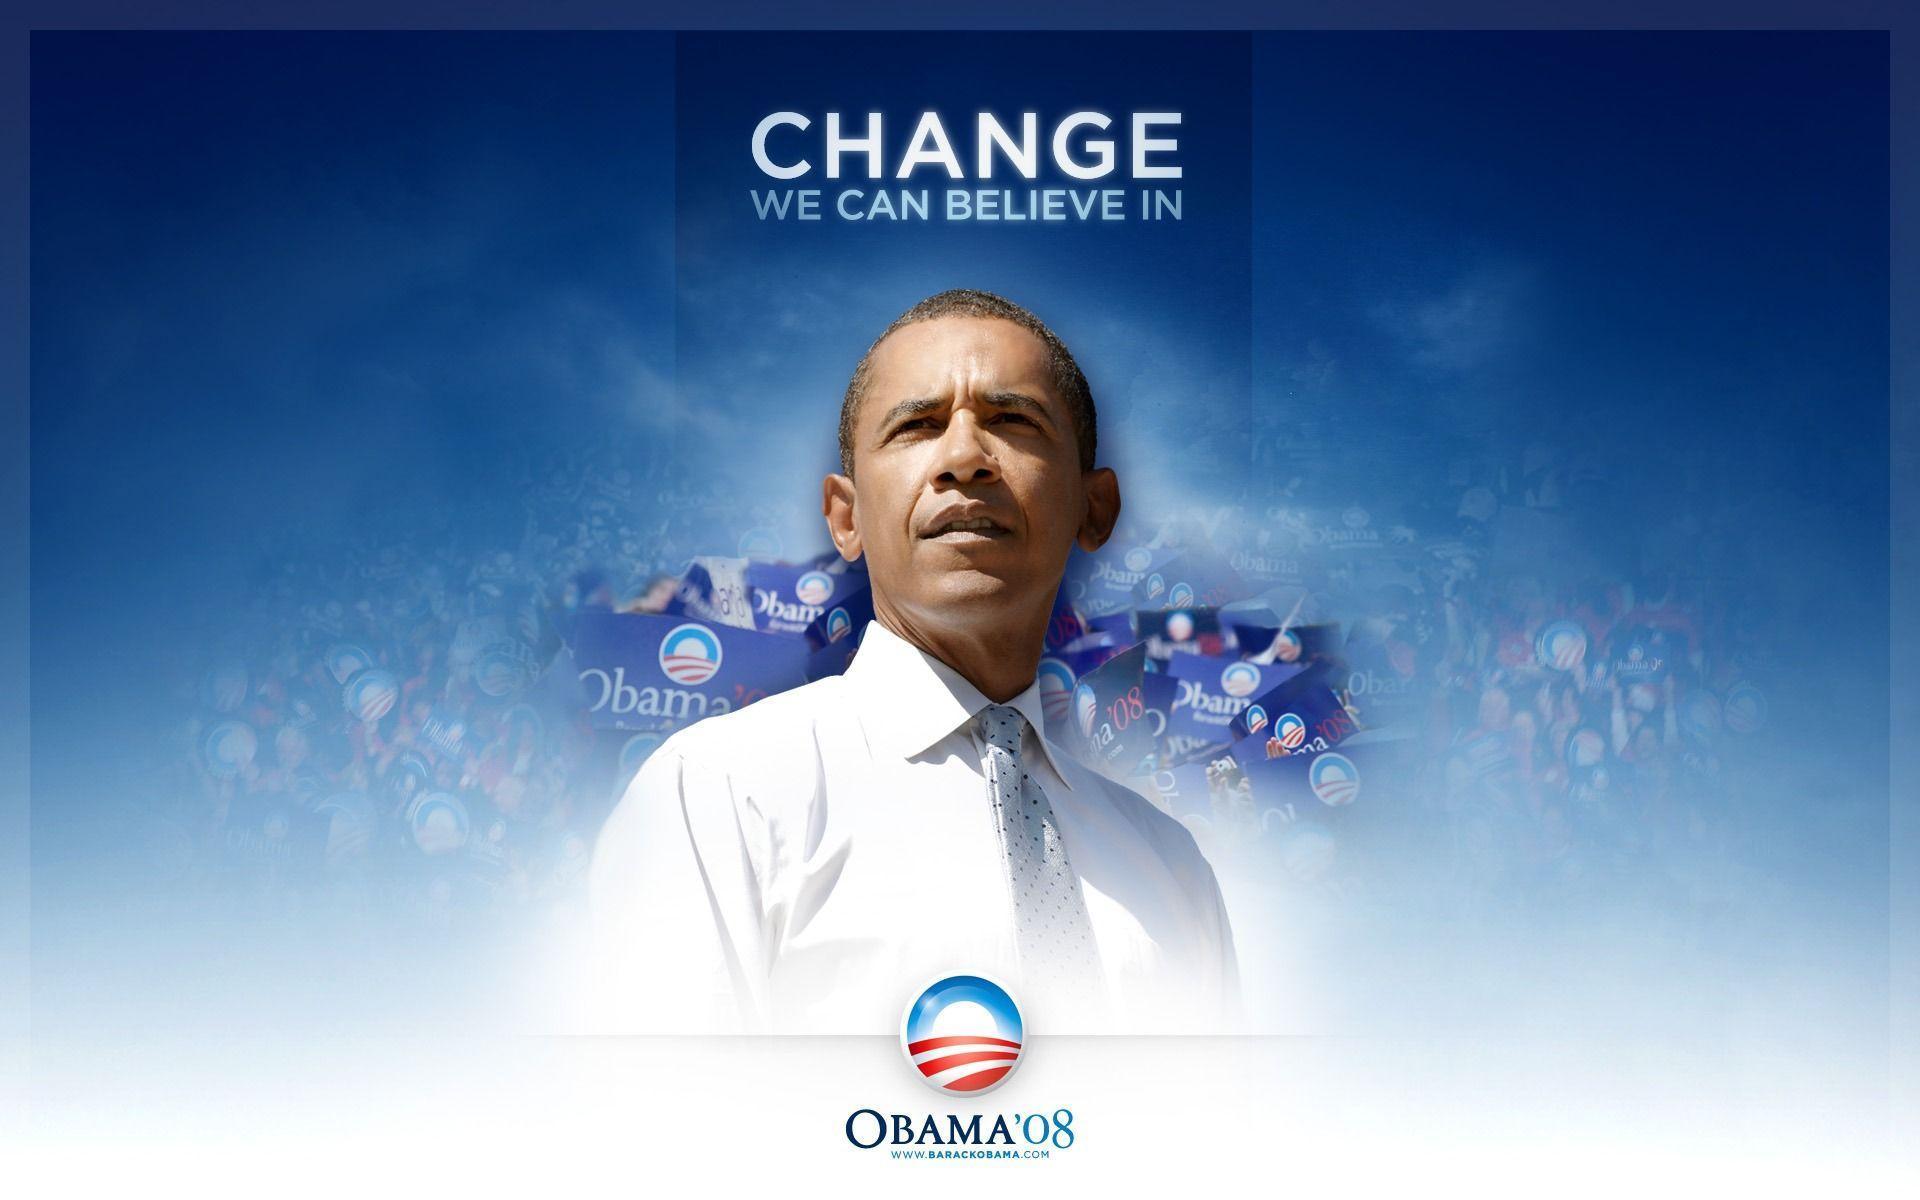 Barack Obama We Can Believe In Change HD Wallpaper